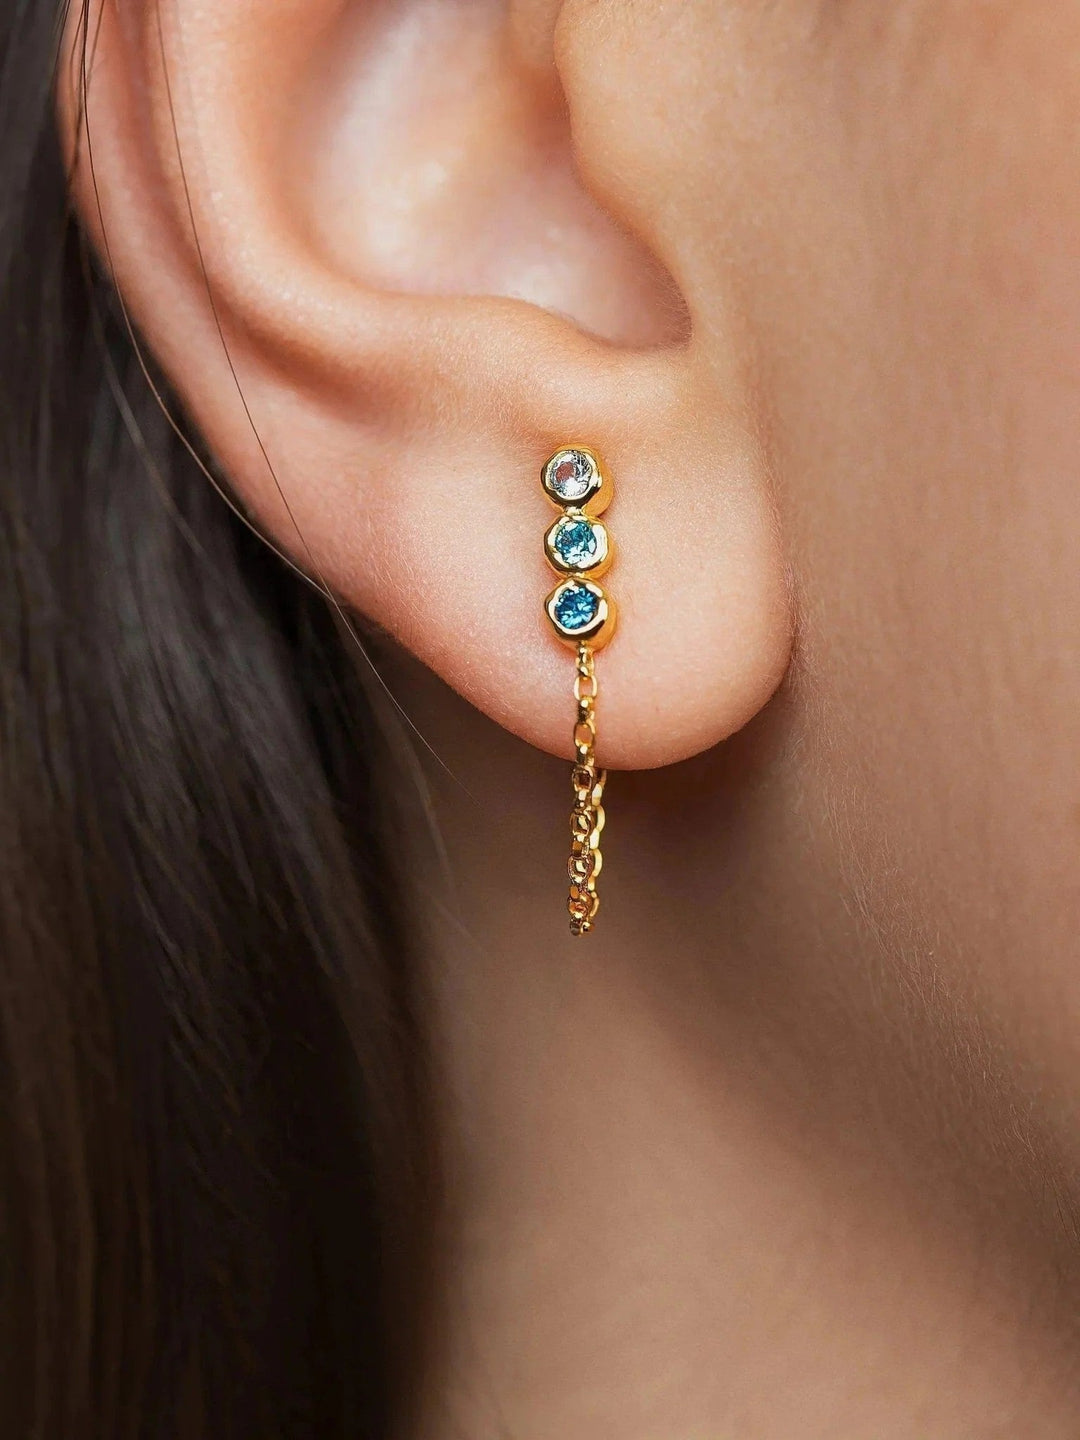 Branca Aquamarine Chain Earrings - BLUESAnniversary Giftaquamarine earringsLunai Jewelry